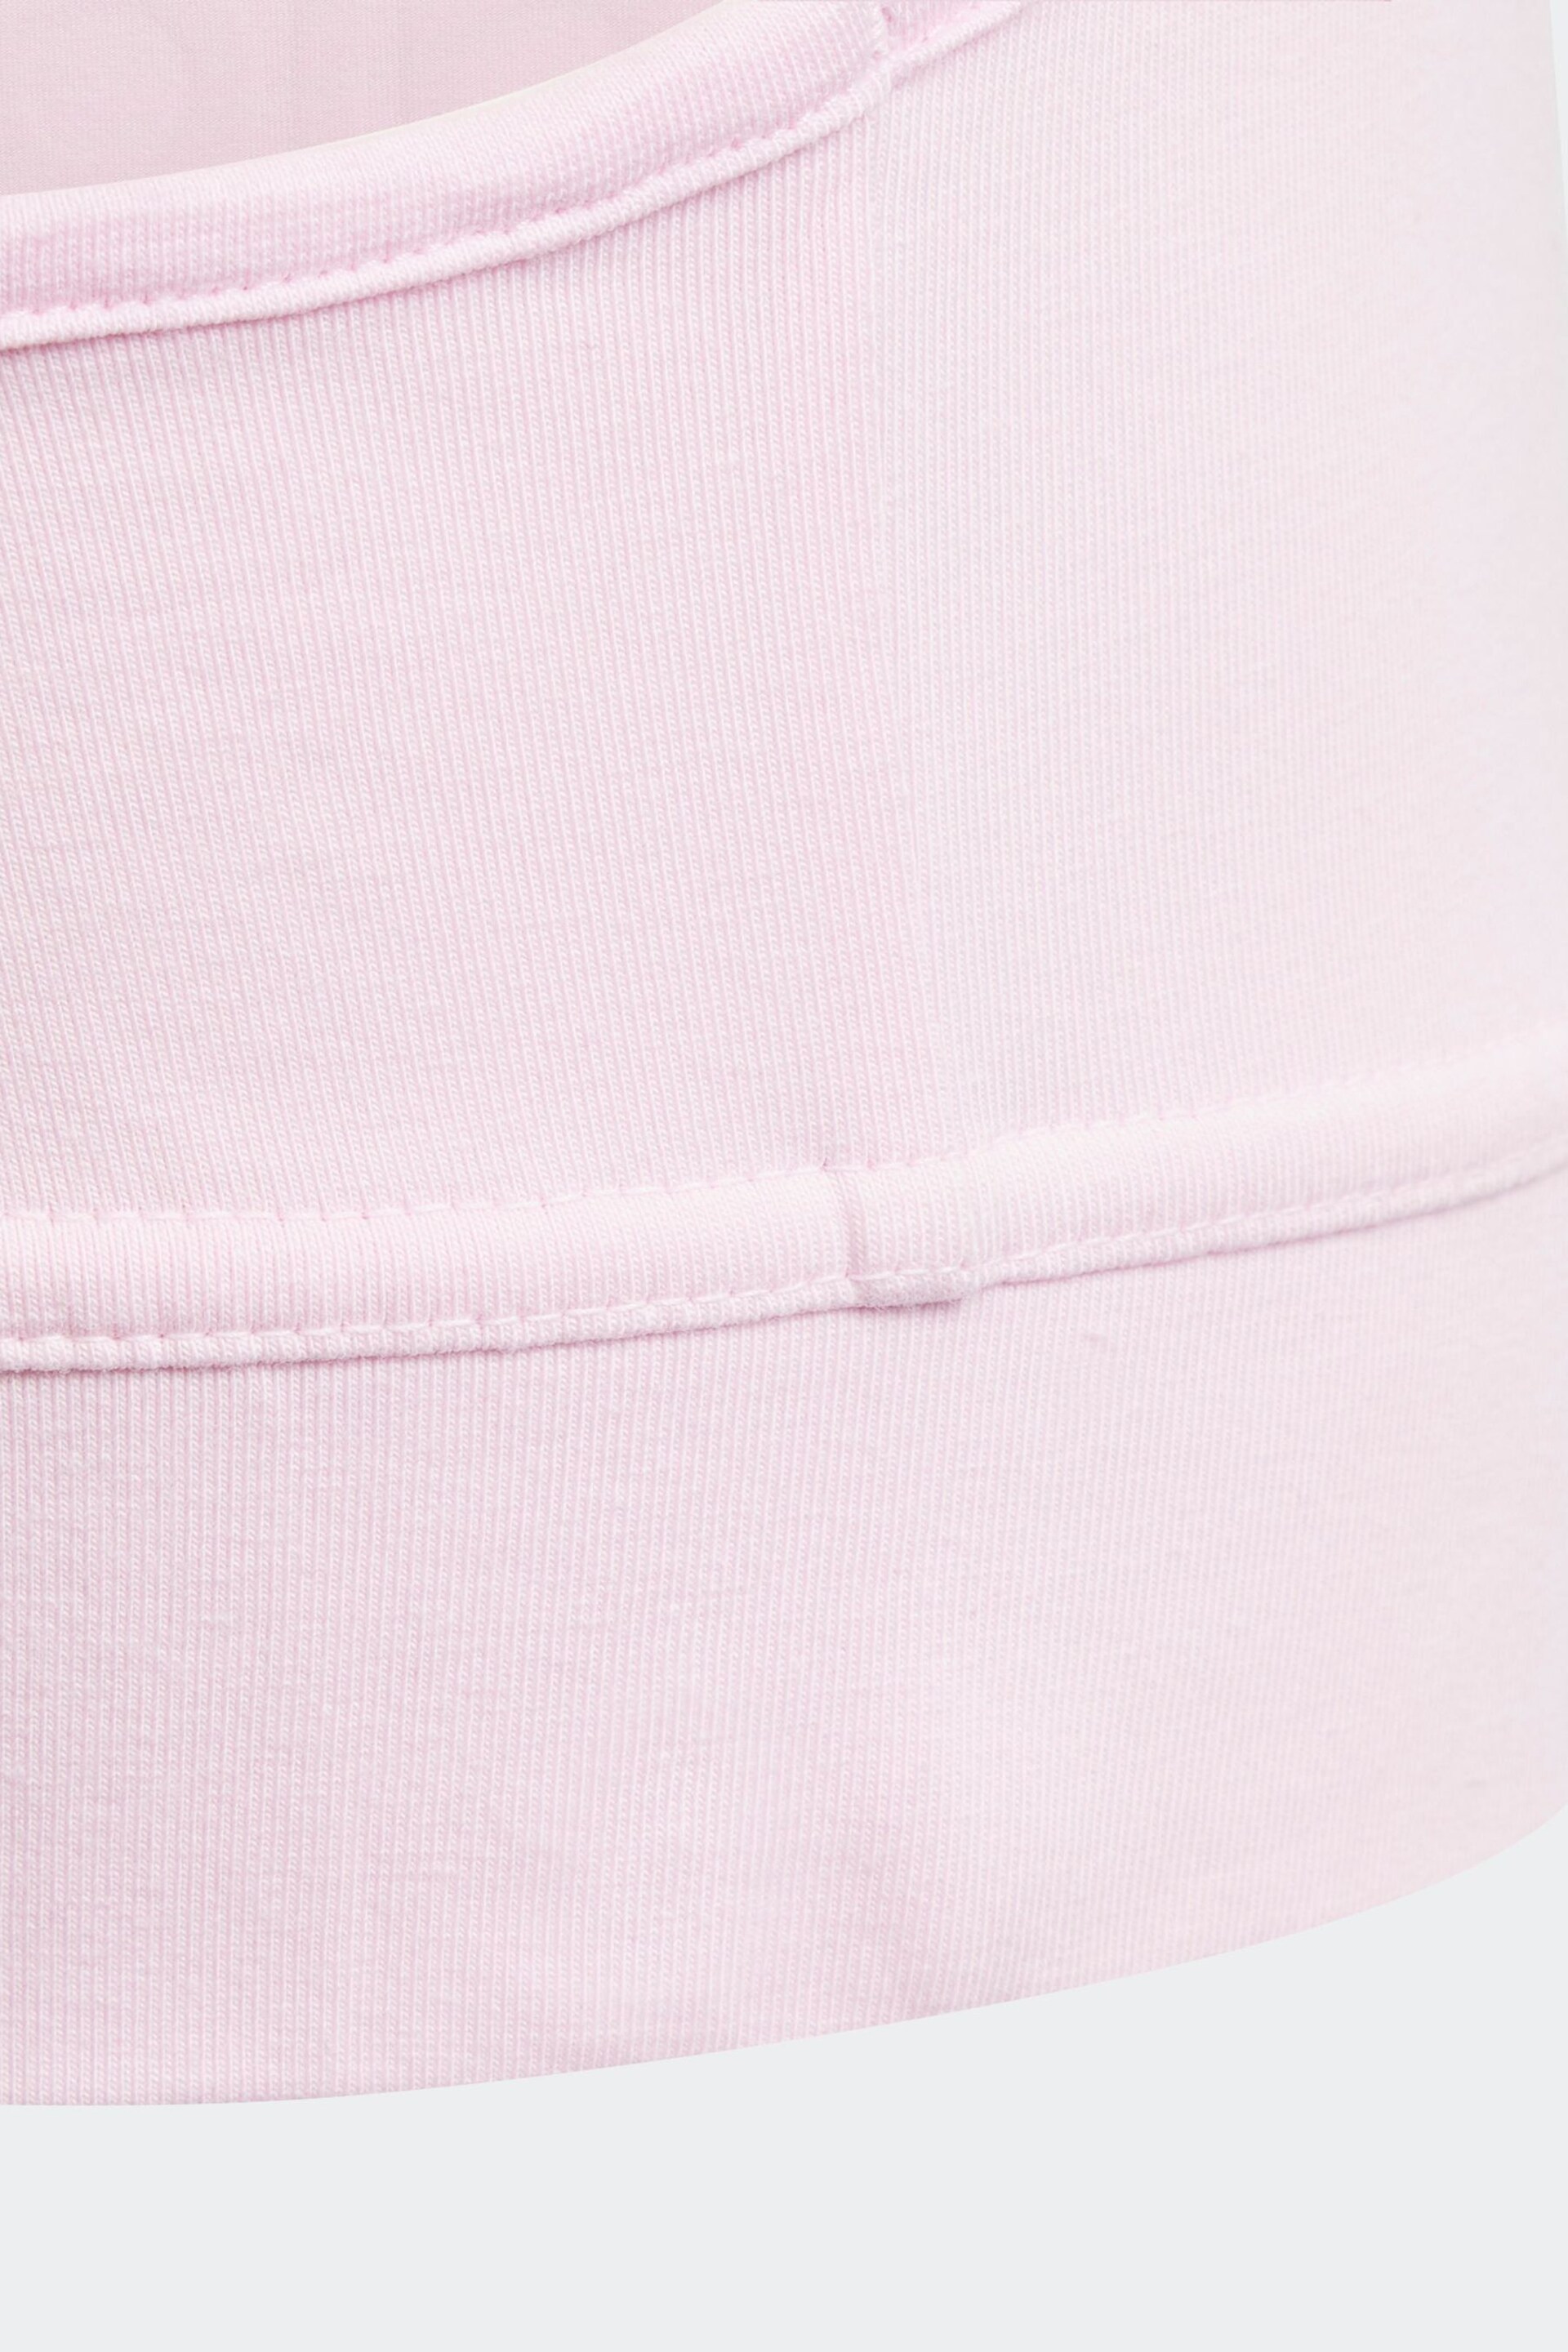 adidas Pink Essentials Linear Logo Cotton Bra Top - Image 5 of 5